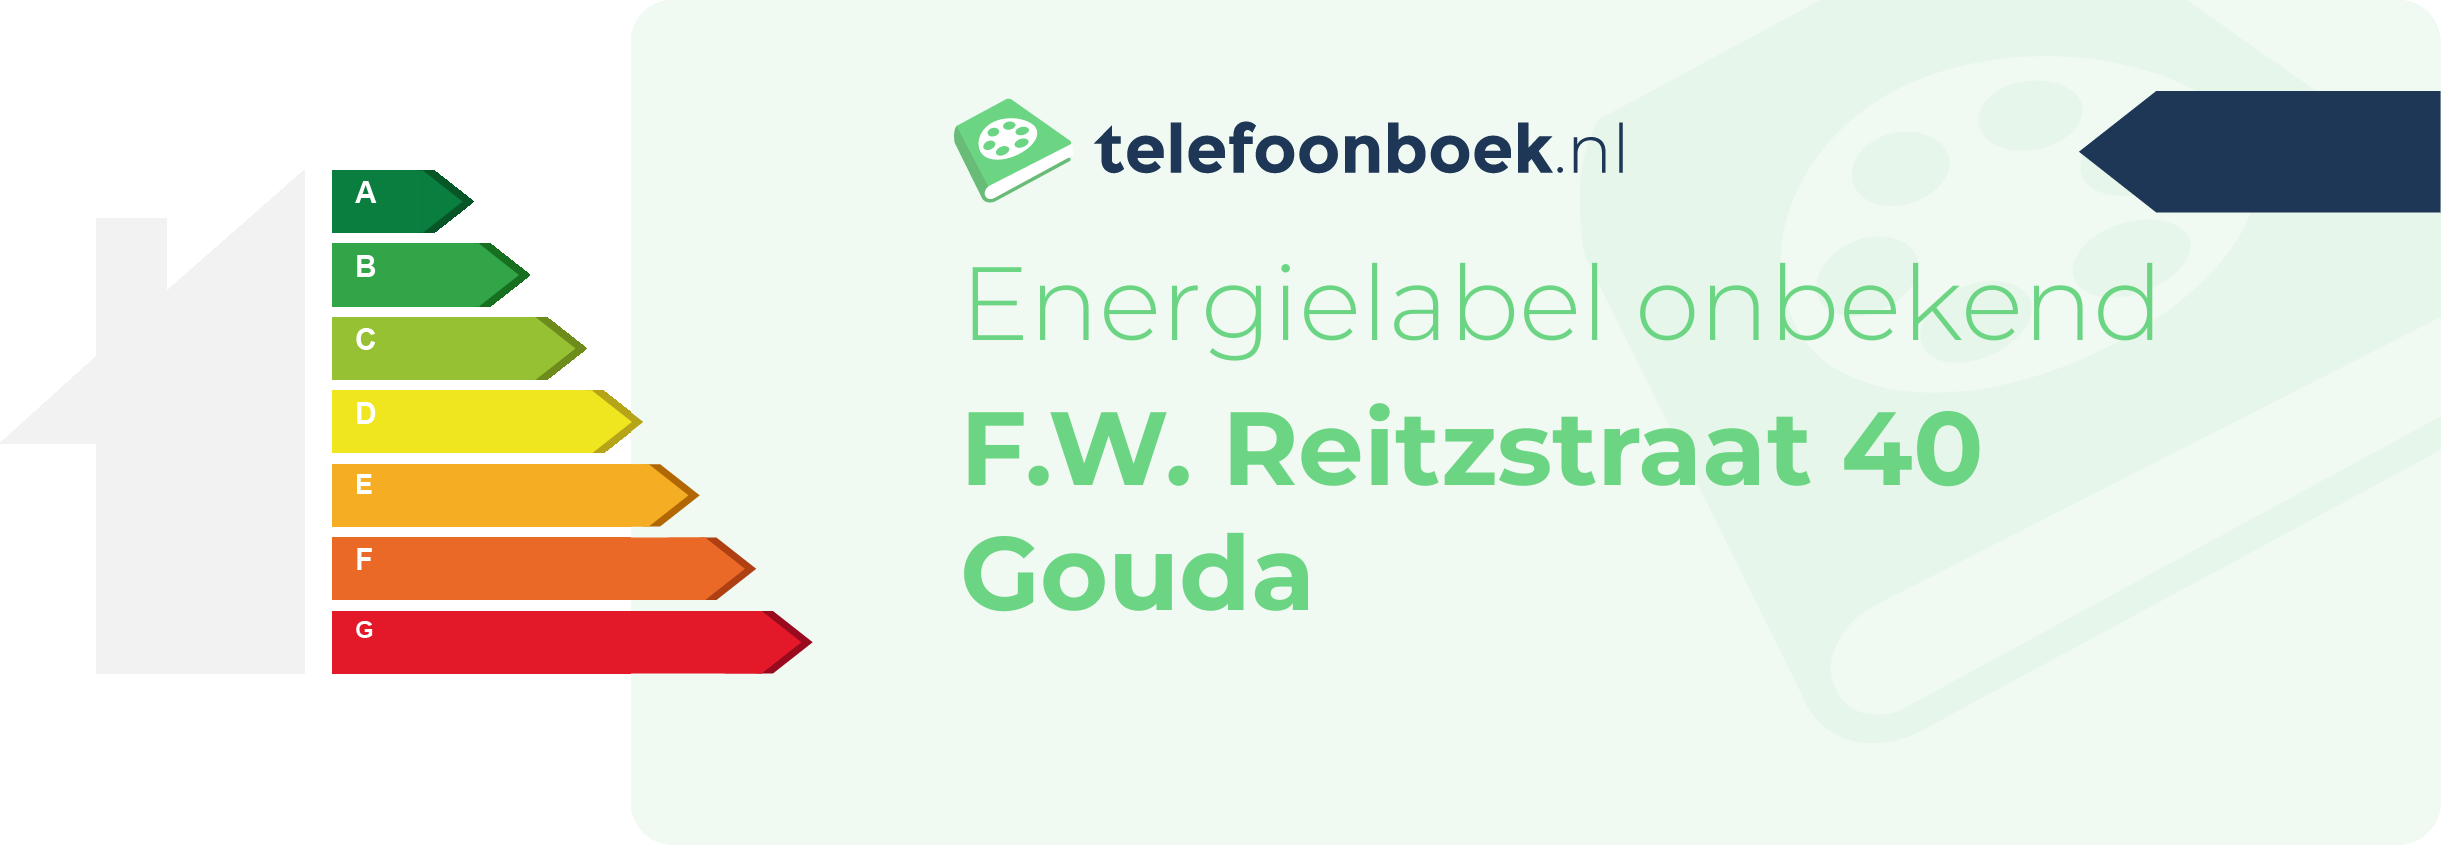 Energielabel F.W. Reitzstraat 40 Gouda